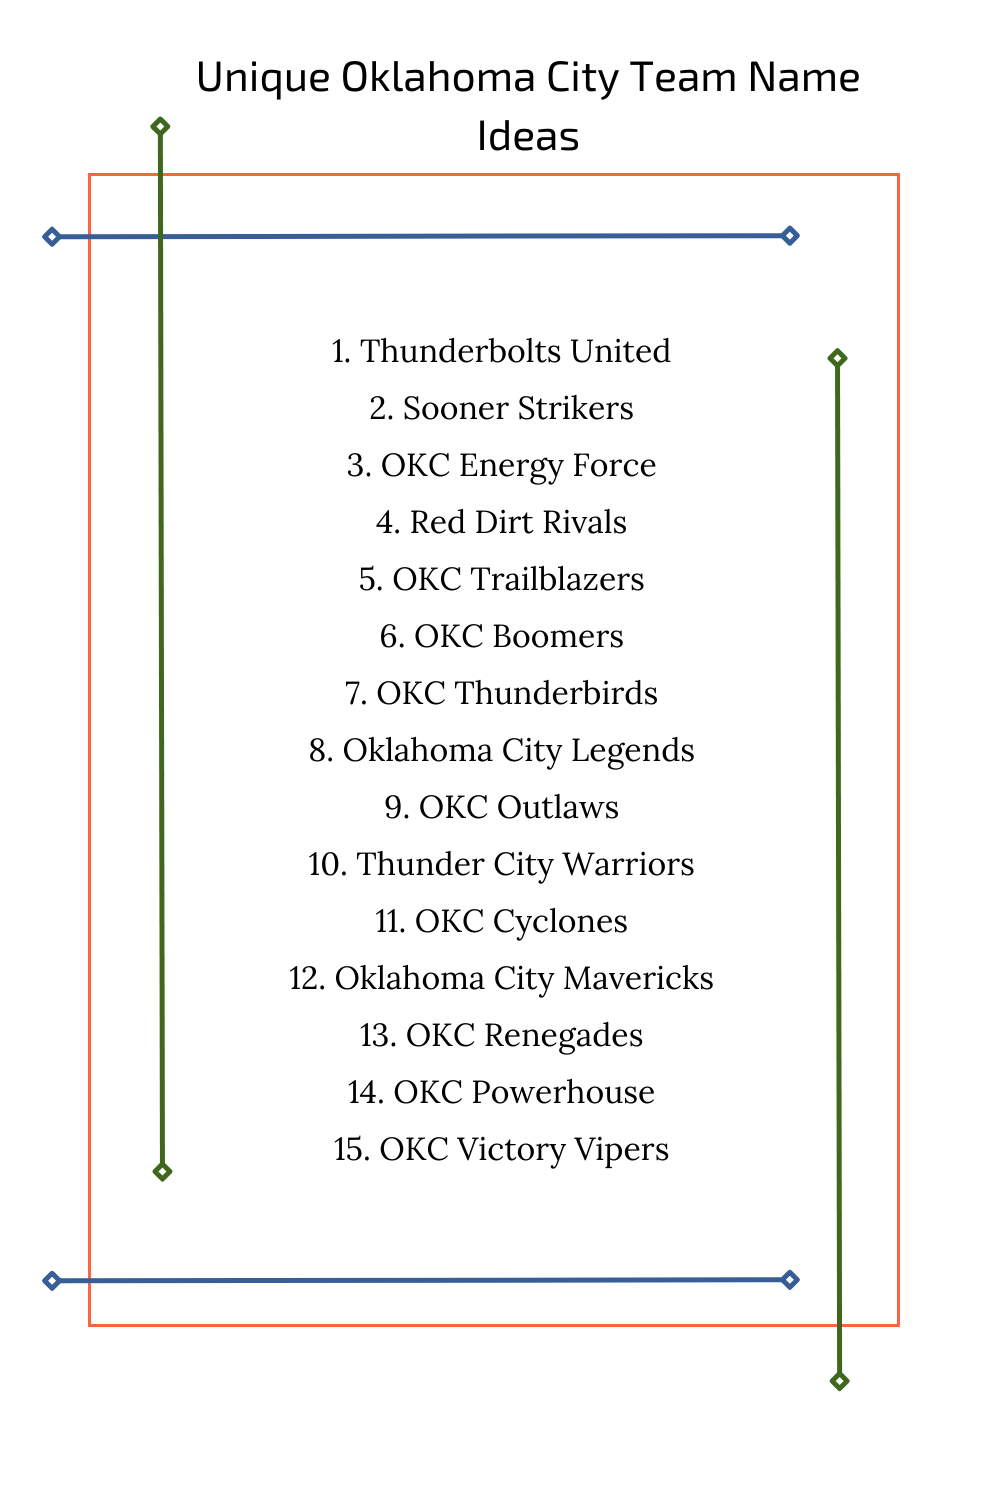 Unique Oklahoma City Team Name Ideas